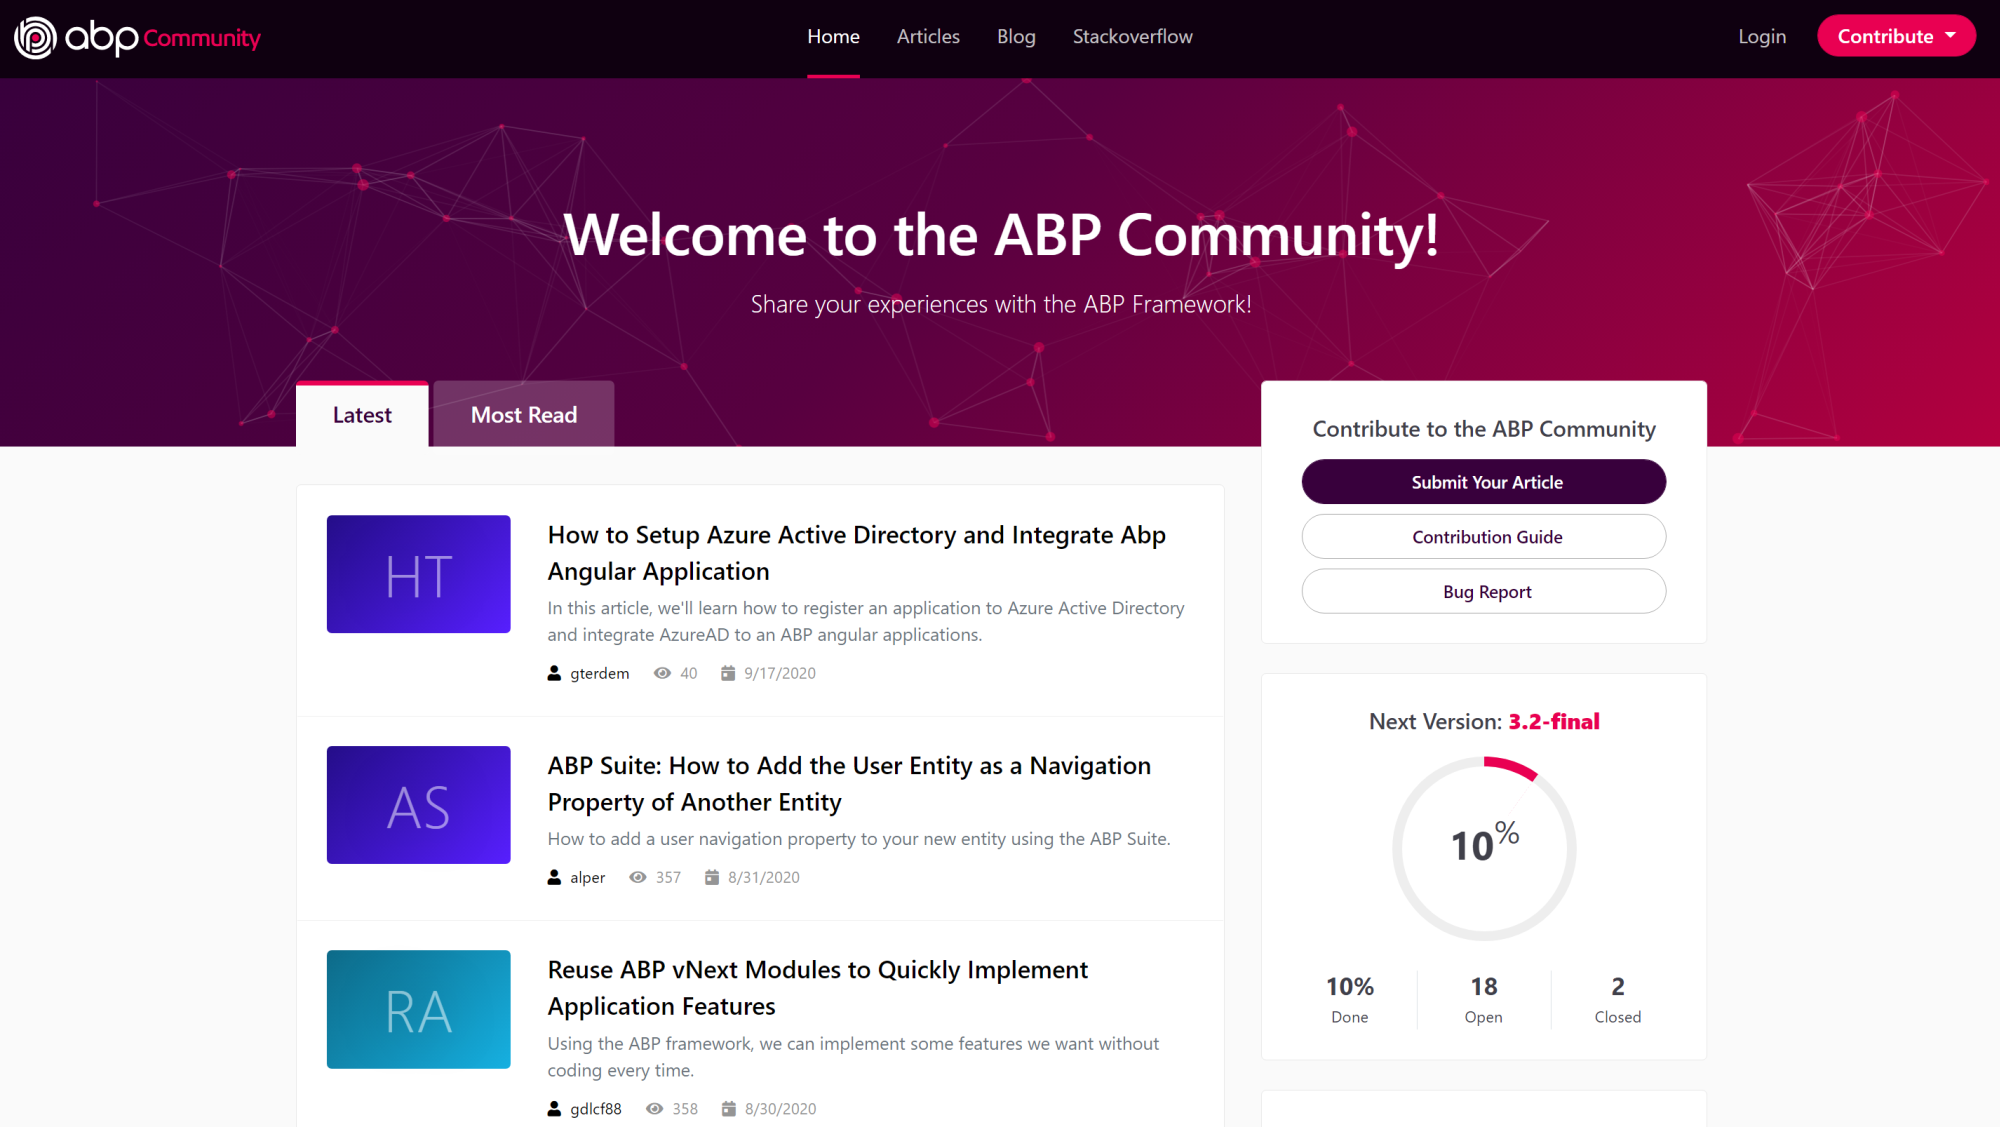 abp-community-20200917